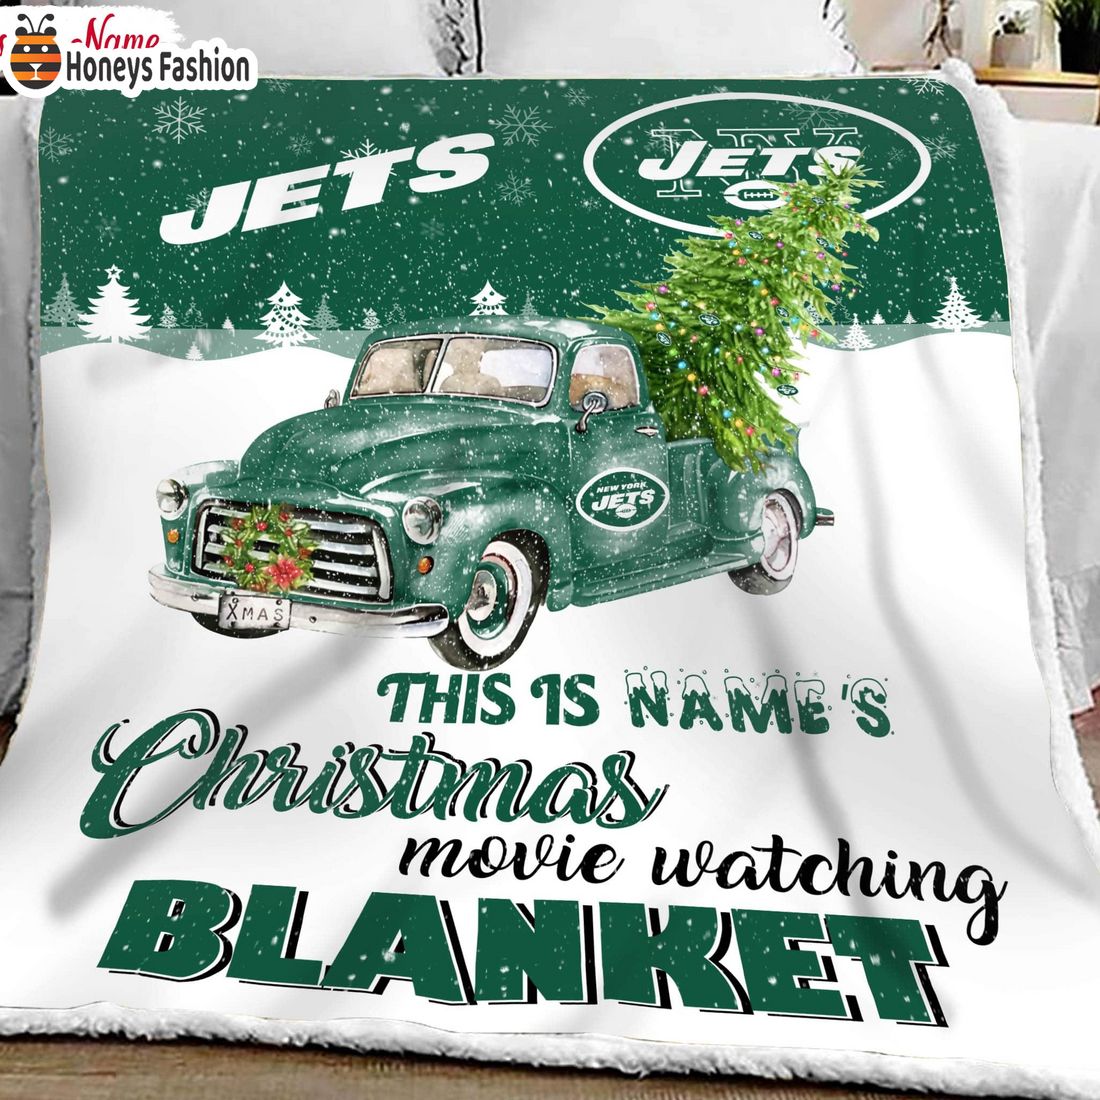 NFL New York Jets Custom Name Christmas movie watching quilt blanket